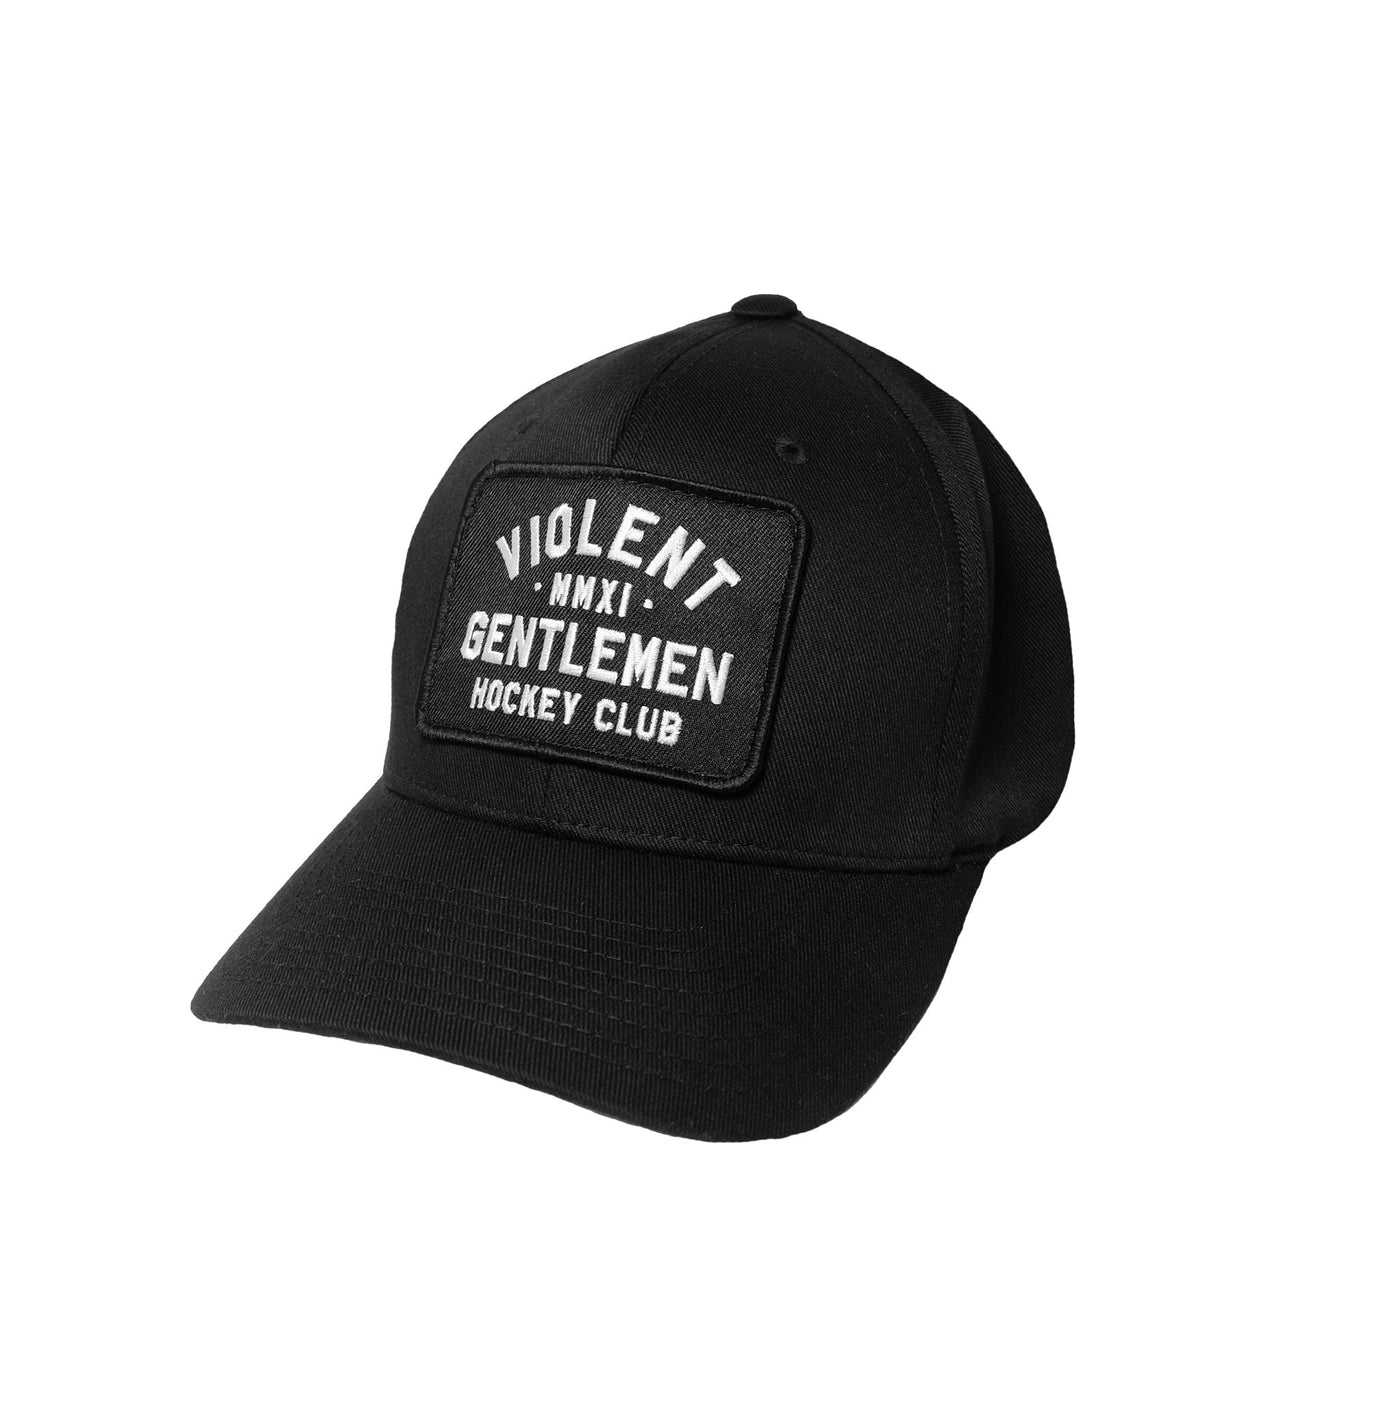 Violent Gentlemen Loyalty Flexfit Hat - The Hockey Shop Source For Sports